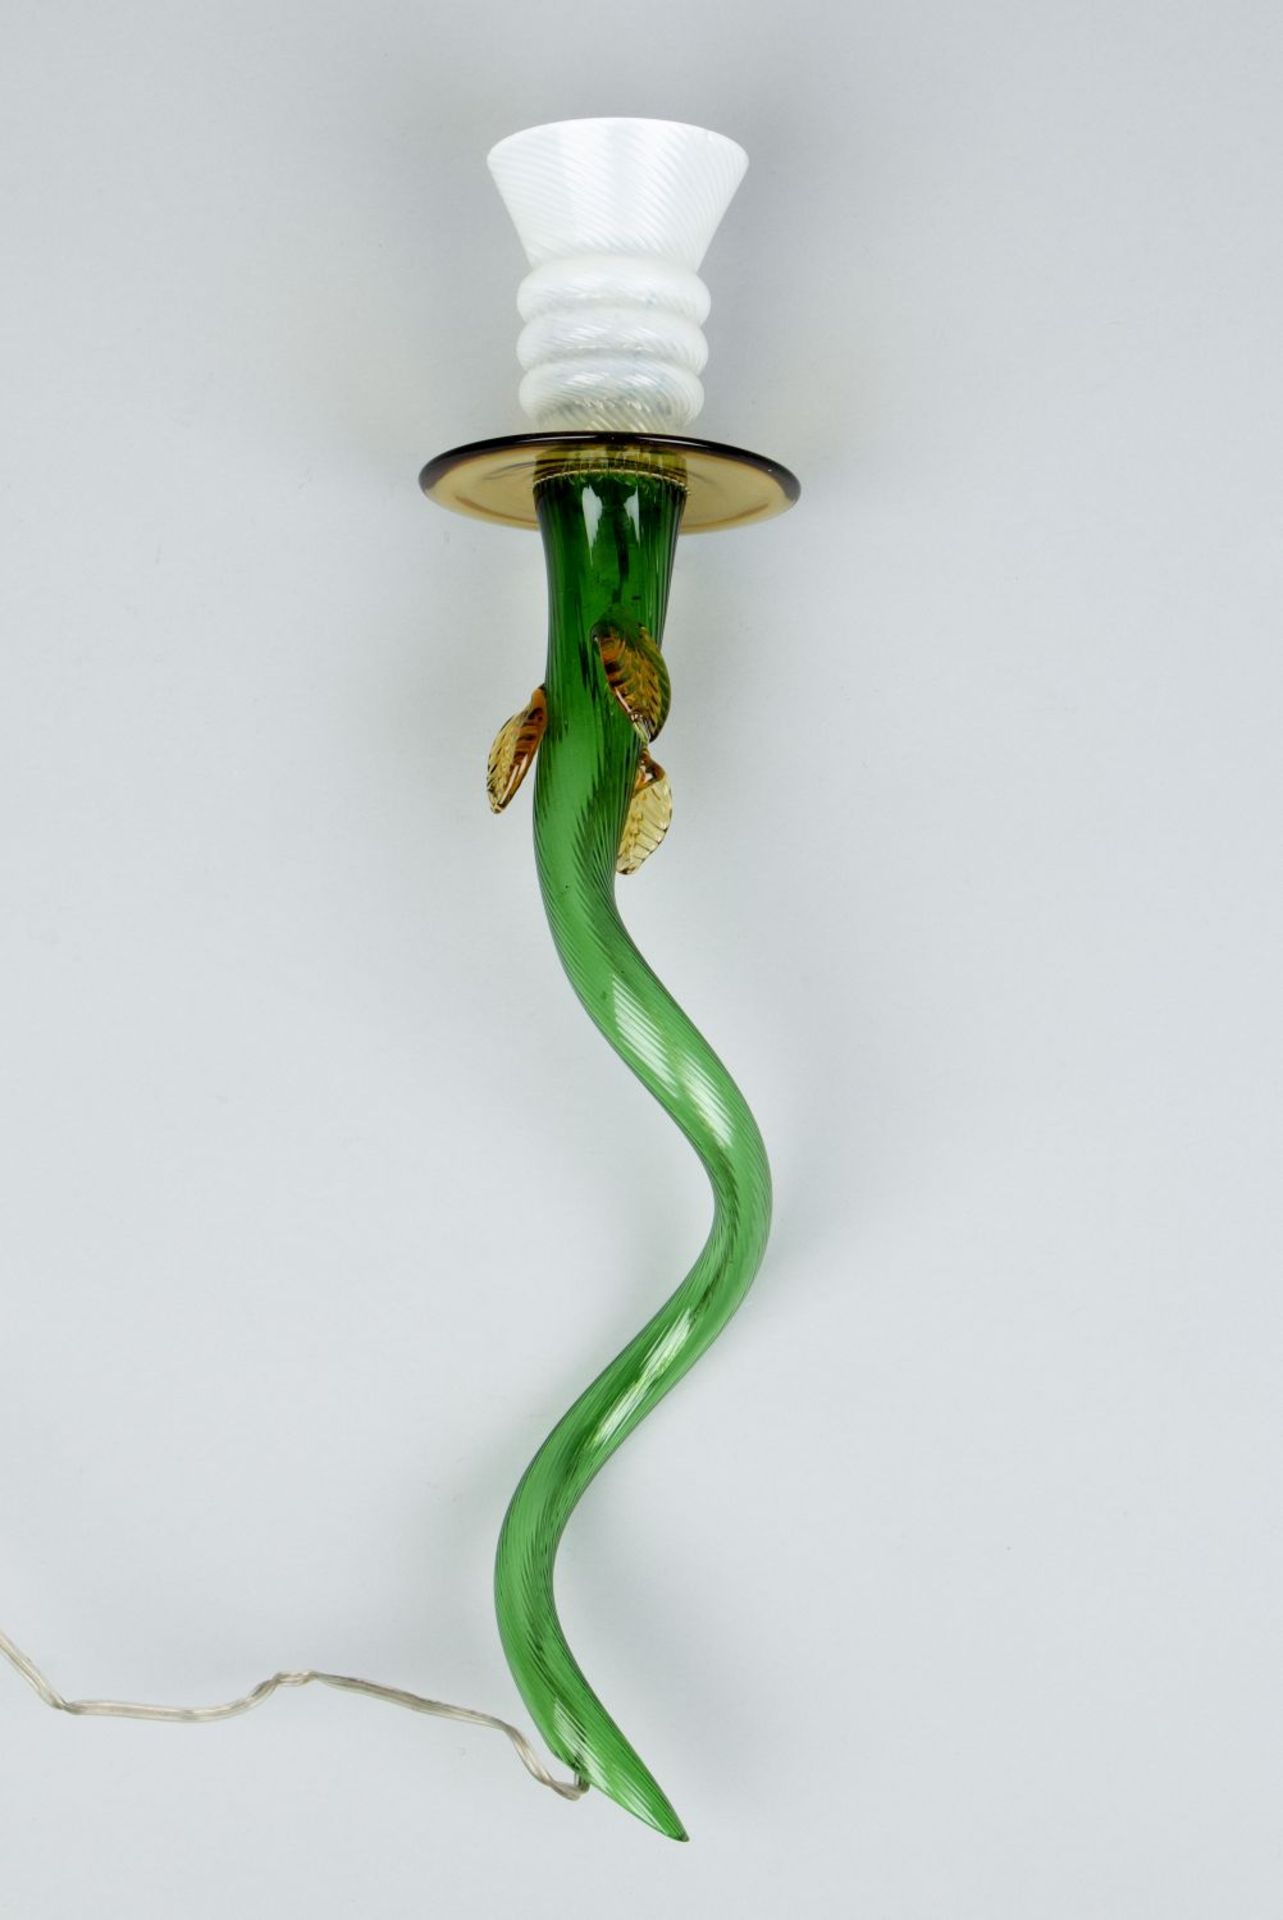 Lampe "Luigi" von Borek Sipek